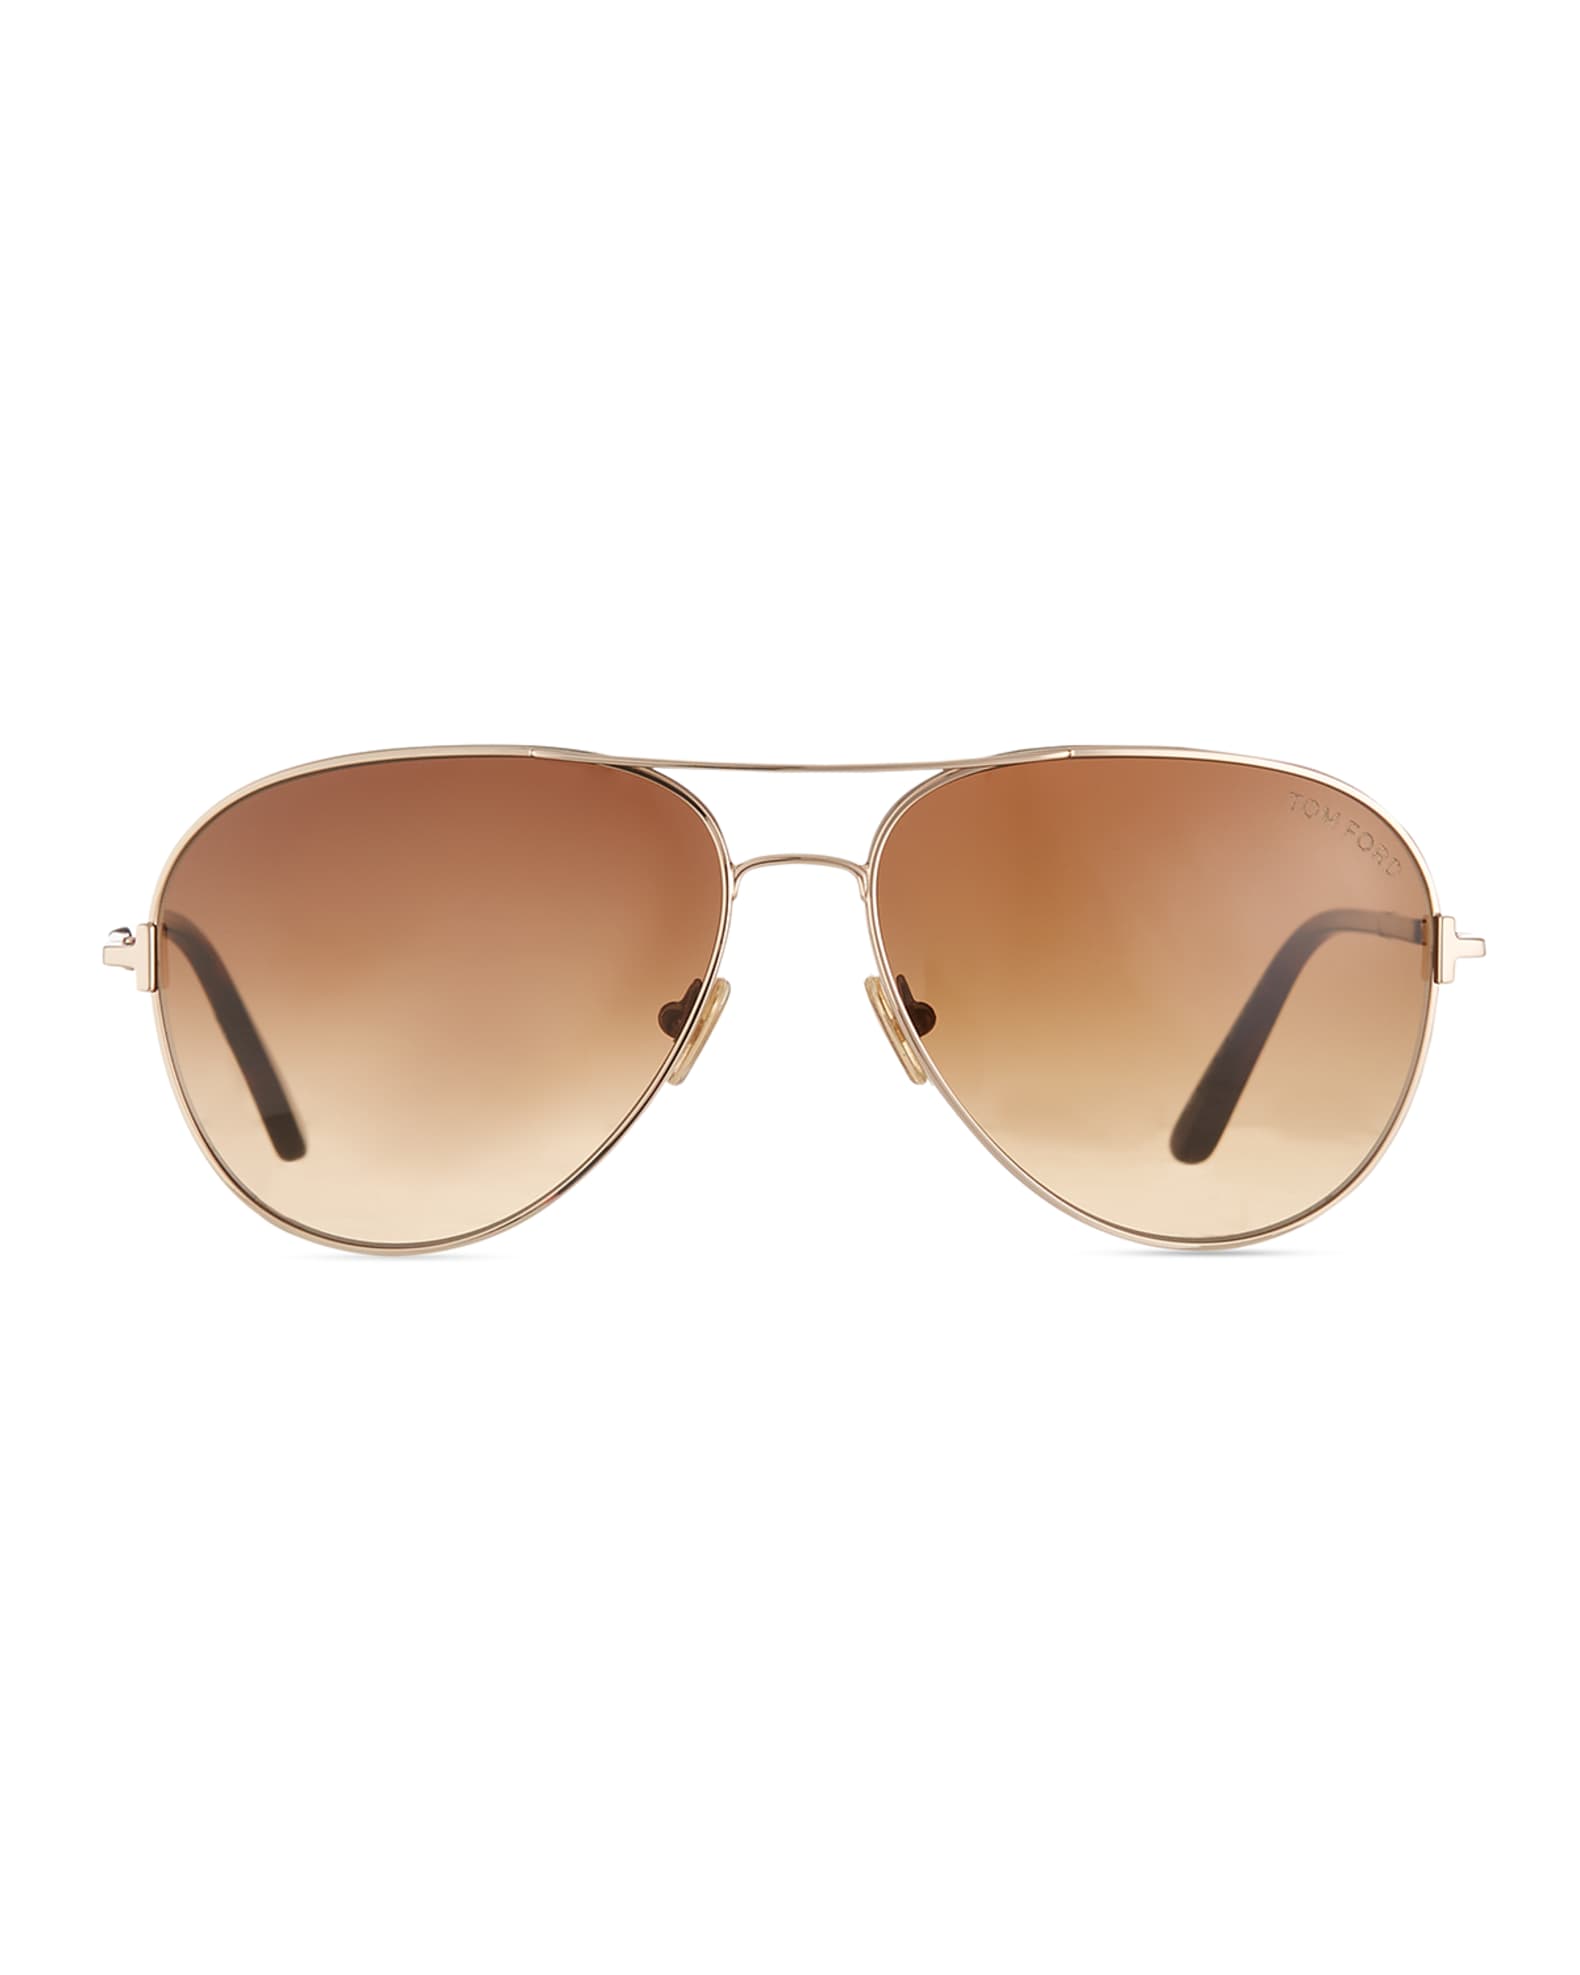 TOM FORD Clark Metal Aviator Sunglasses, Brown/Gold | Neiman Marcus